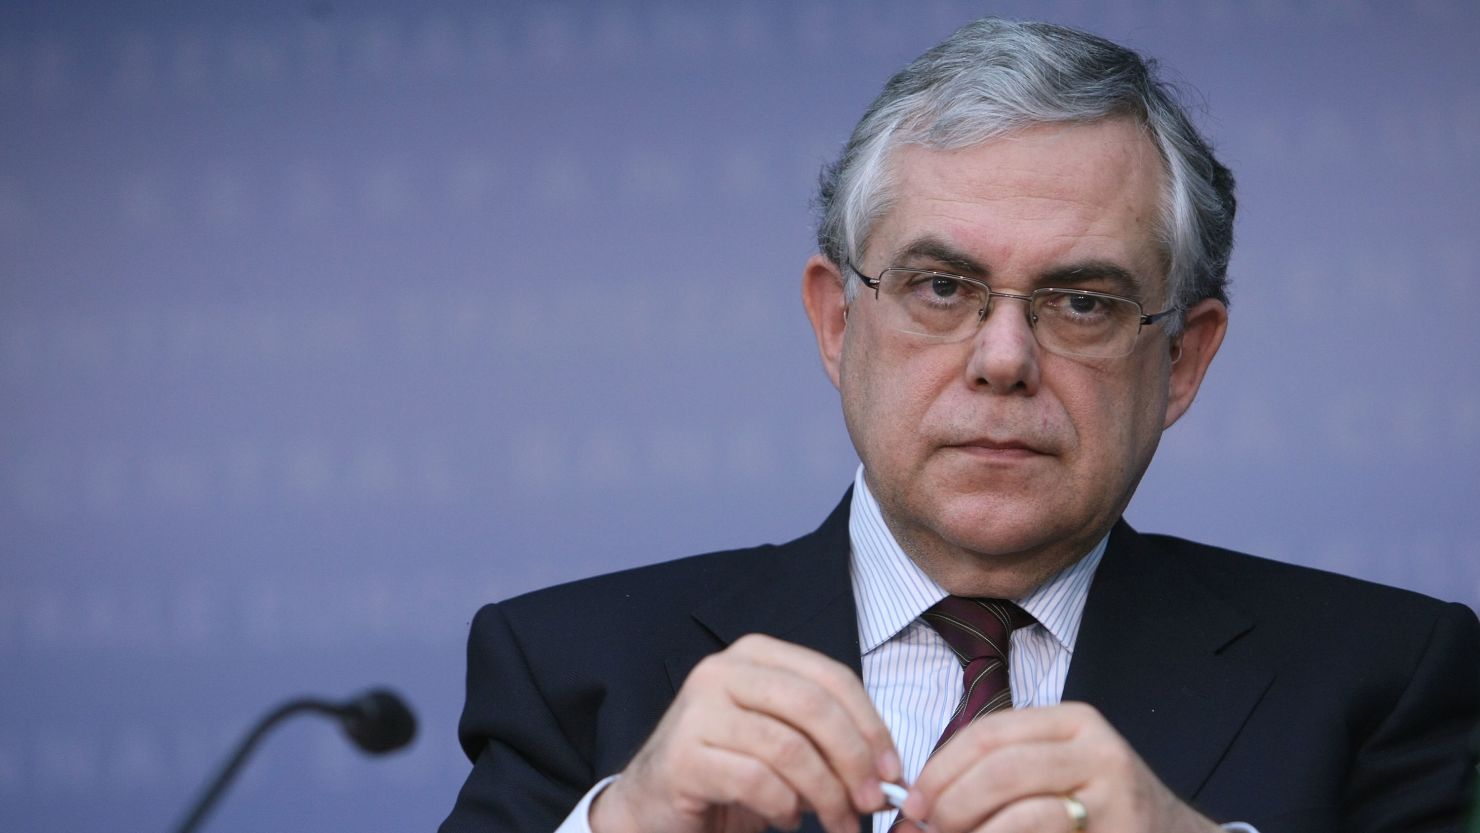 Lucas Papademos, a former European Central Bank vice president, has been named prime minister of Greece.